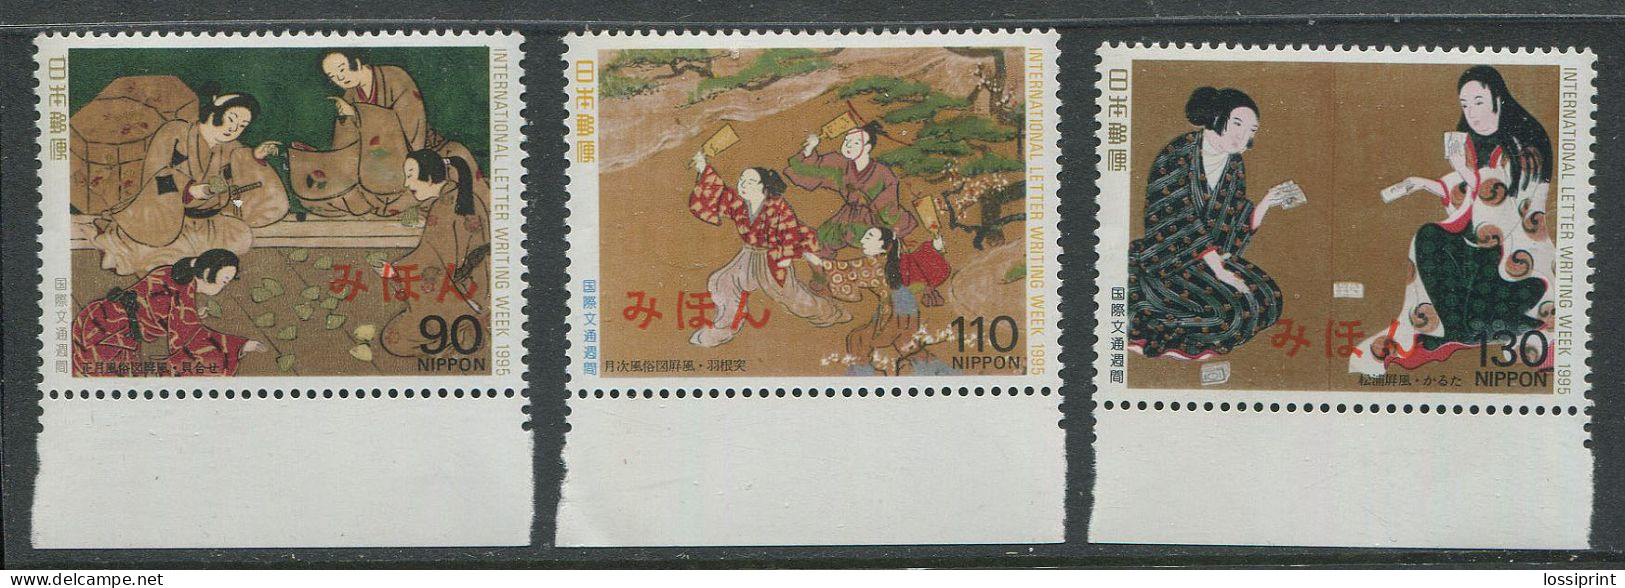 Japan:Unused Stamps Serie International Letter Writing Week, 1995, MNH - Ungebraucht